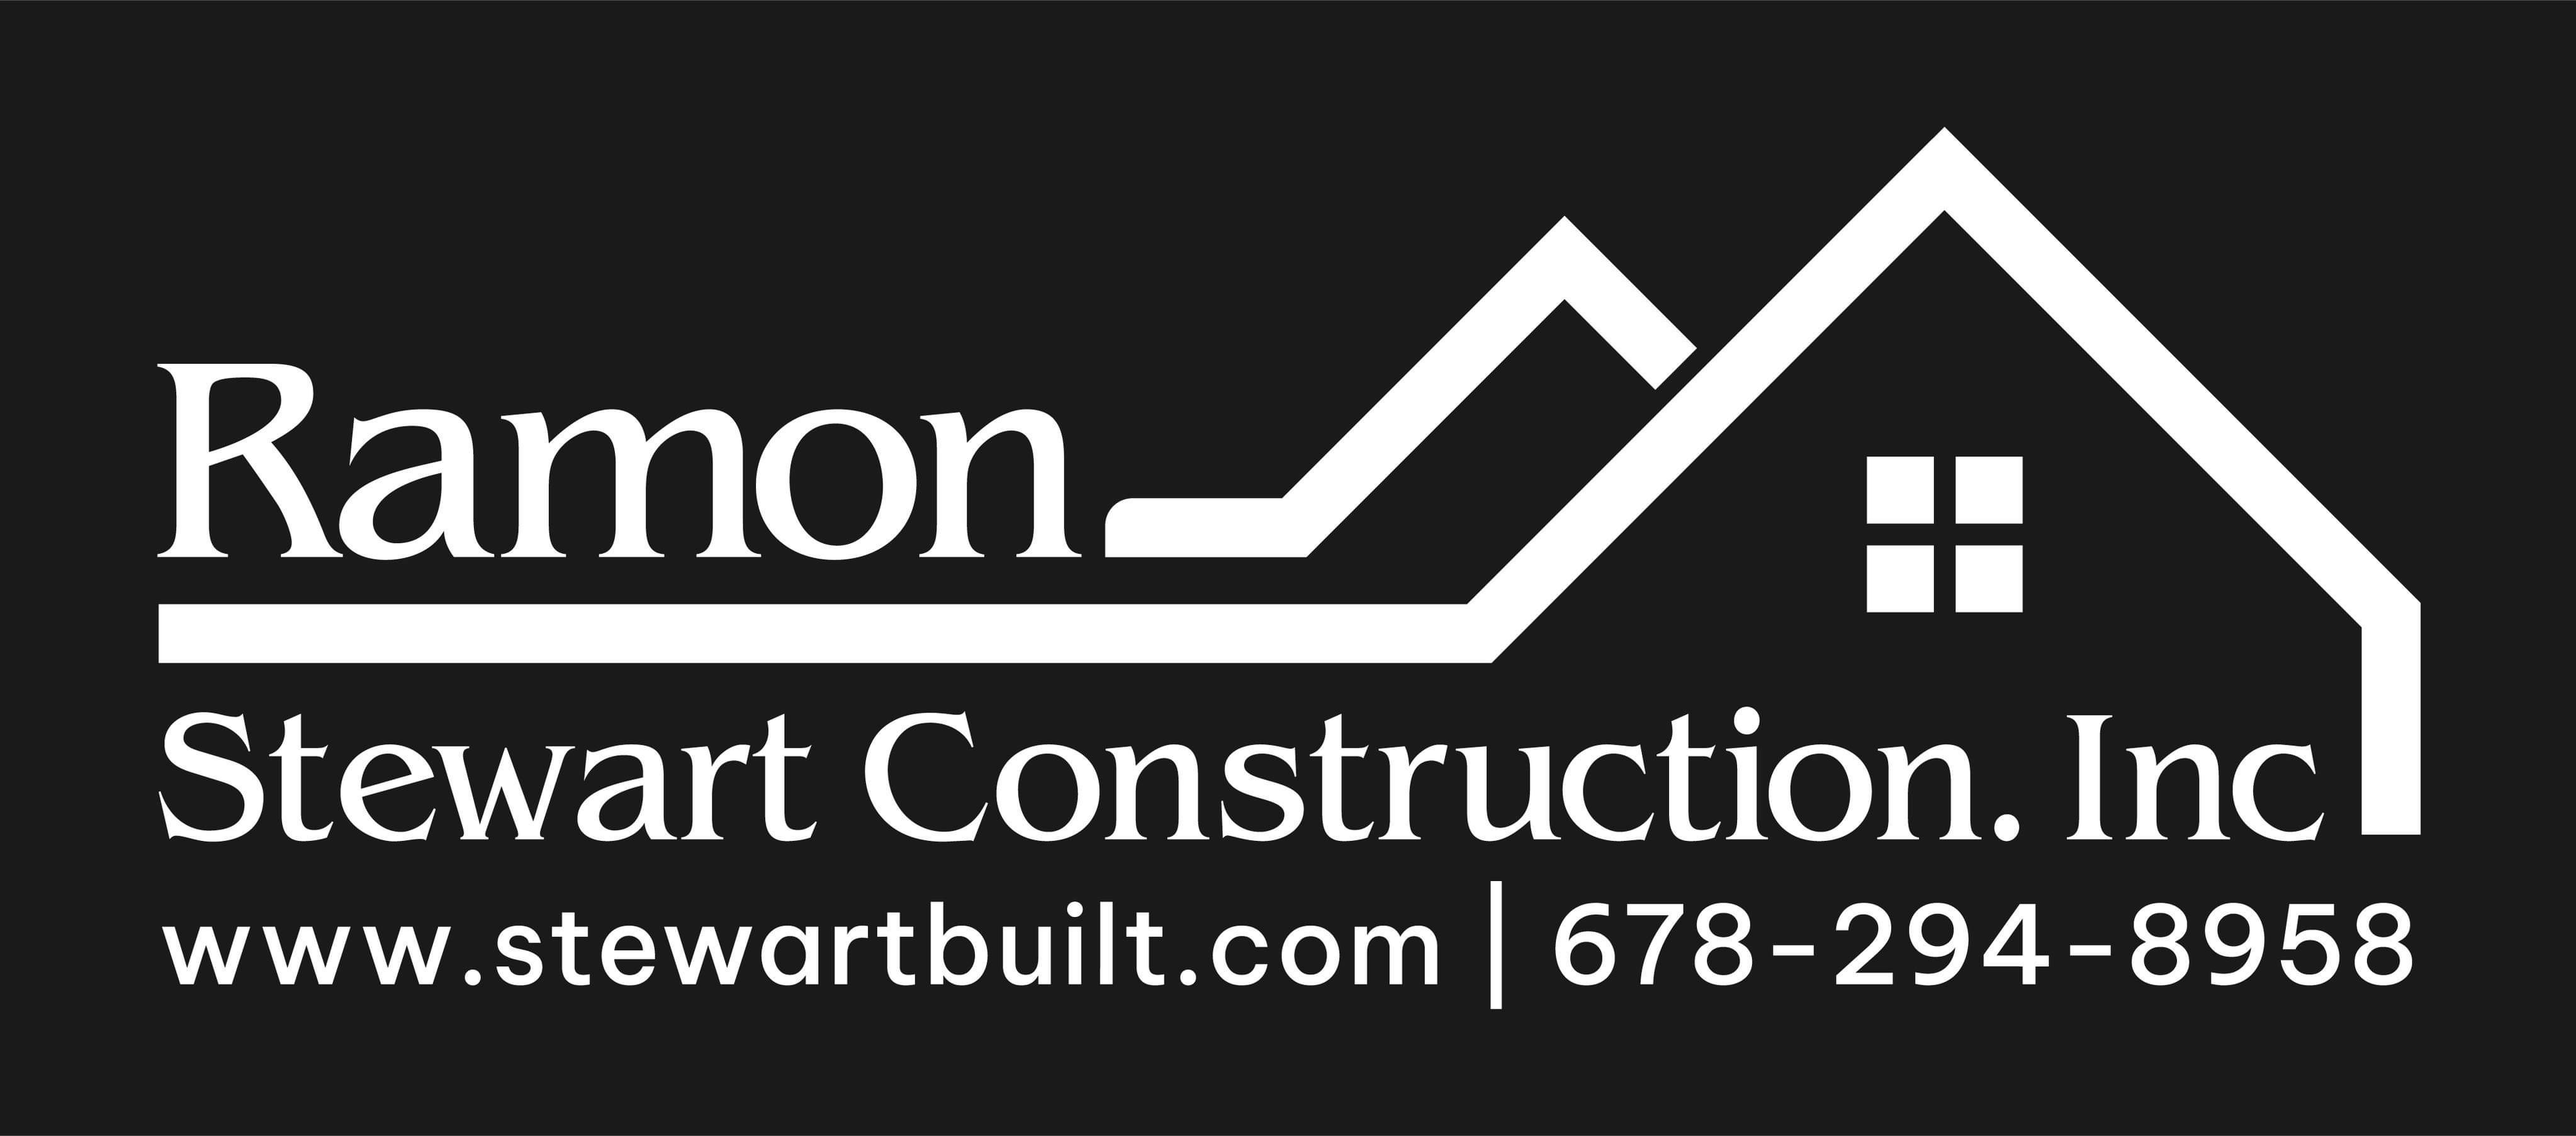 Ramon Stewart Construction Logo